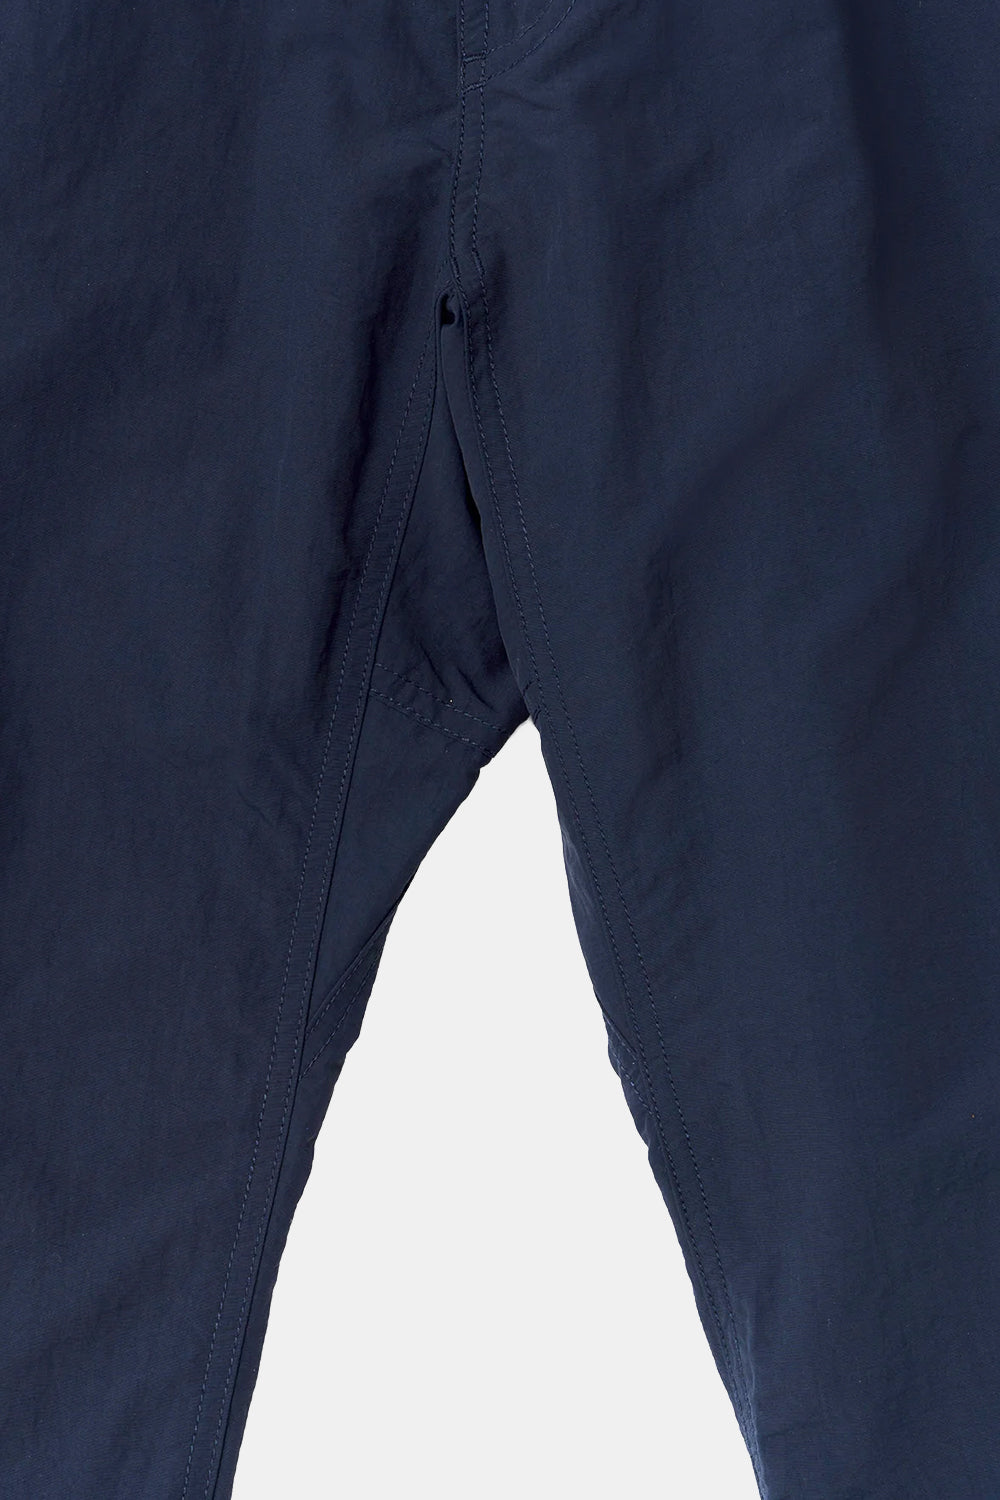 Pantalon de camion léger compressible Gramicci (double bleu marine)